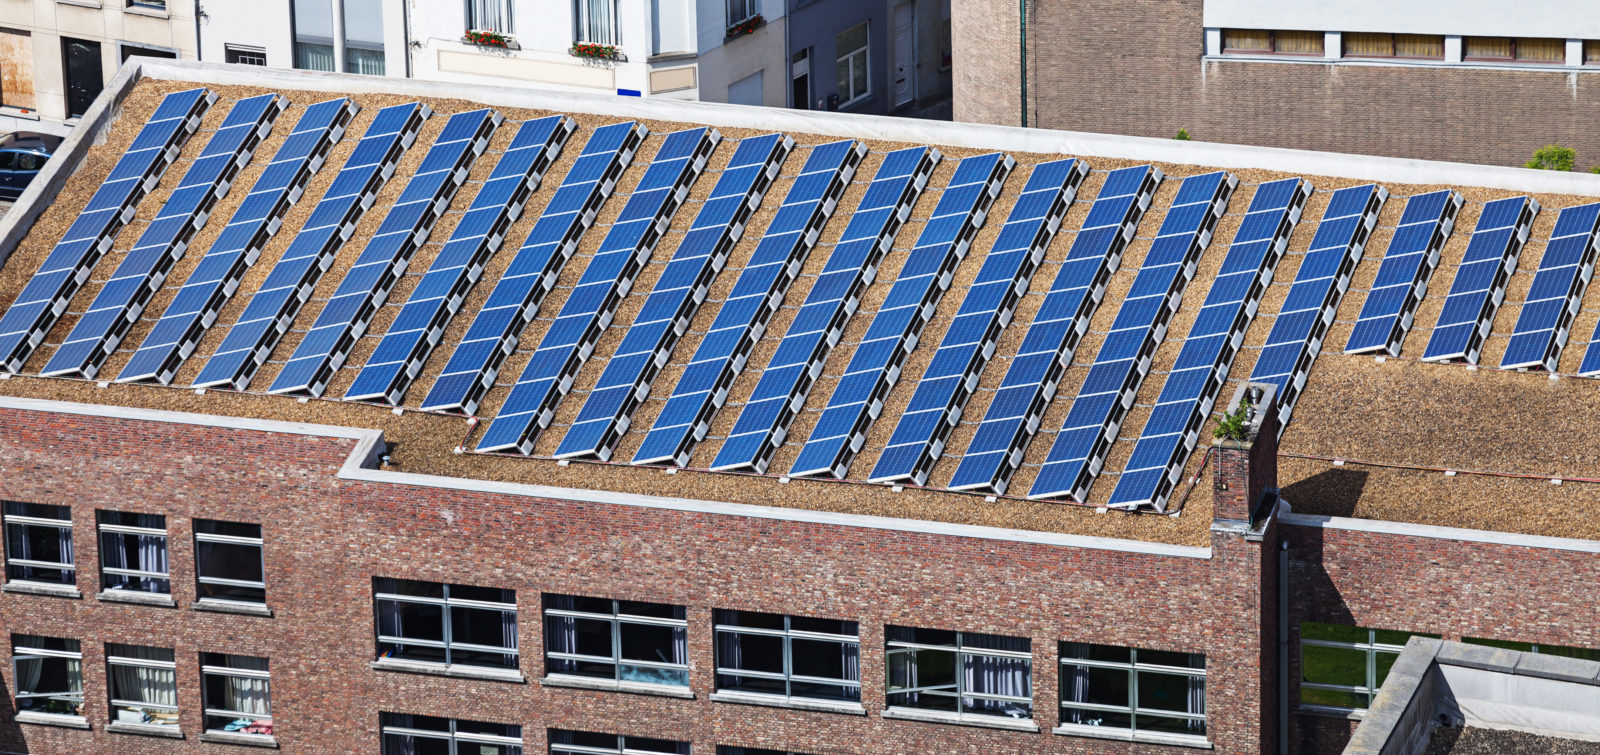 How Do Solar Panels Impact Commercial Property Risks?